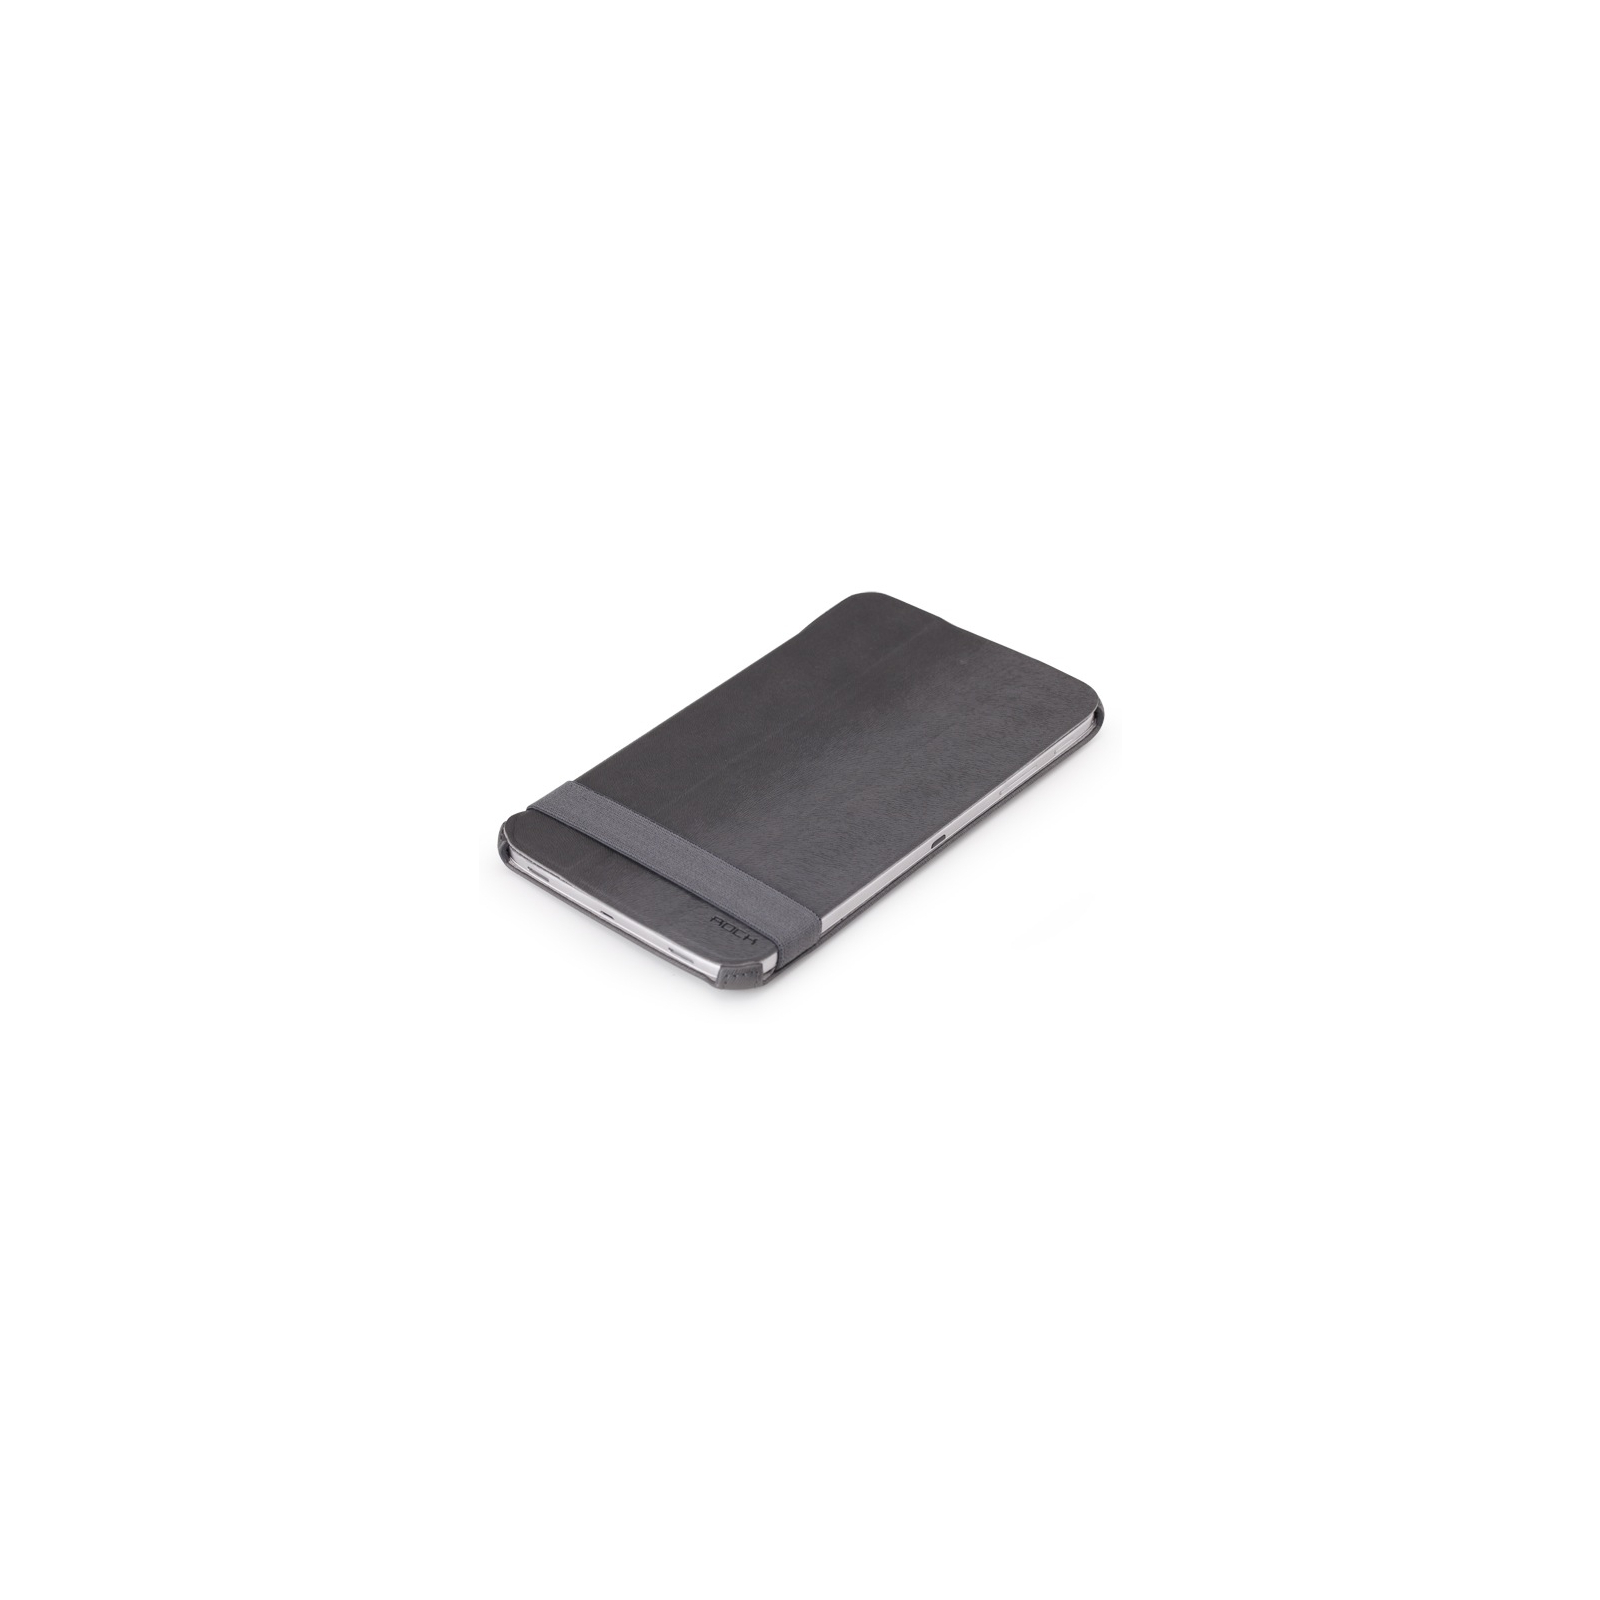 Чехол для планшета Rock Samsung Galaxy Tab3 8.0 T3100 Texture series dark grey (T3100-40018) изображение 5